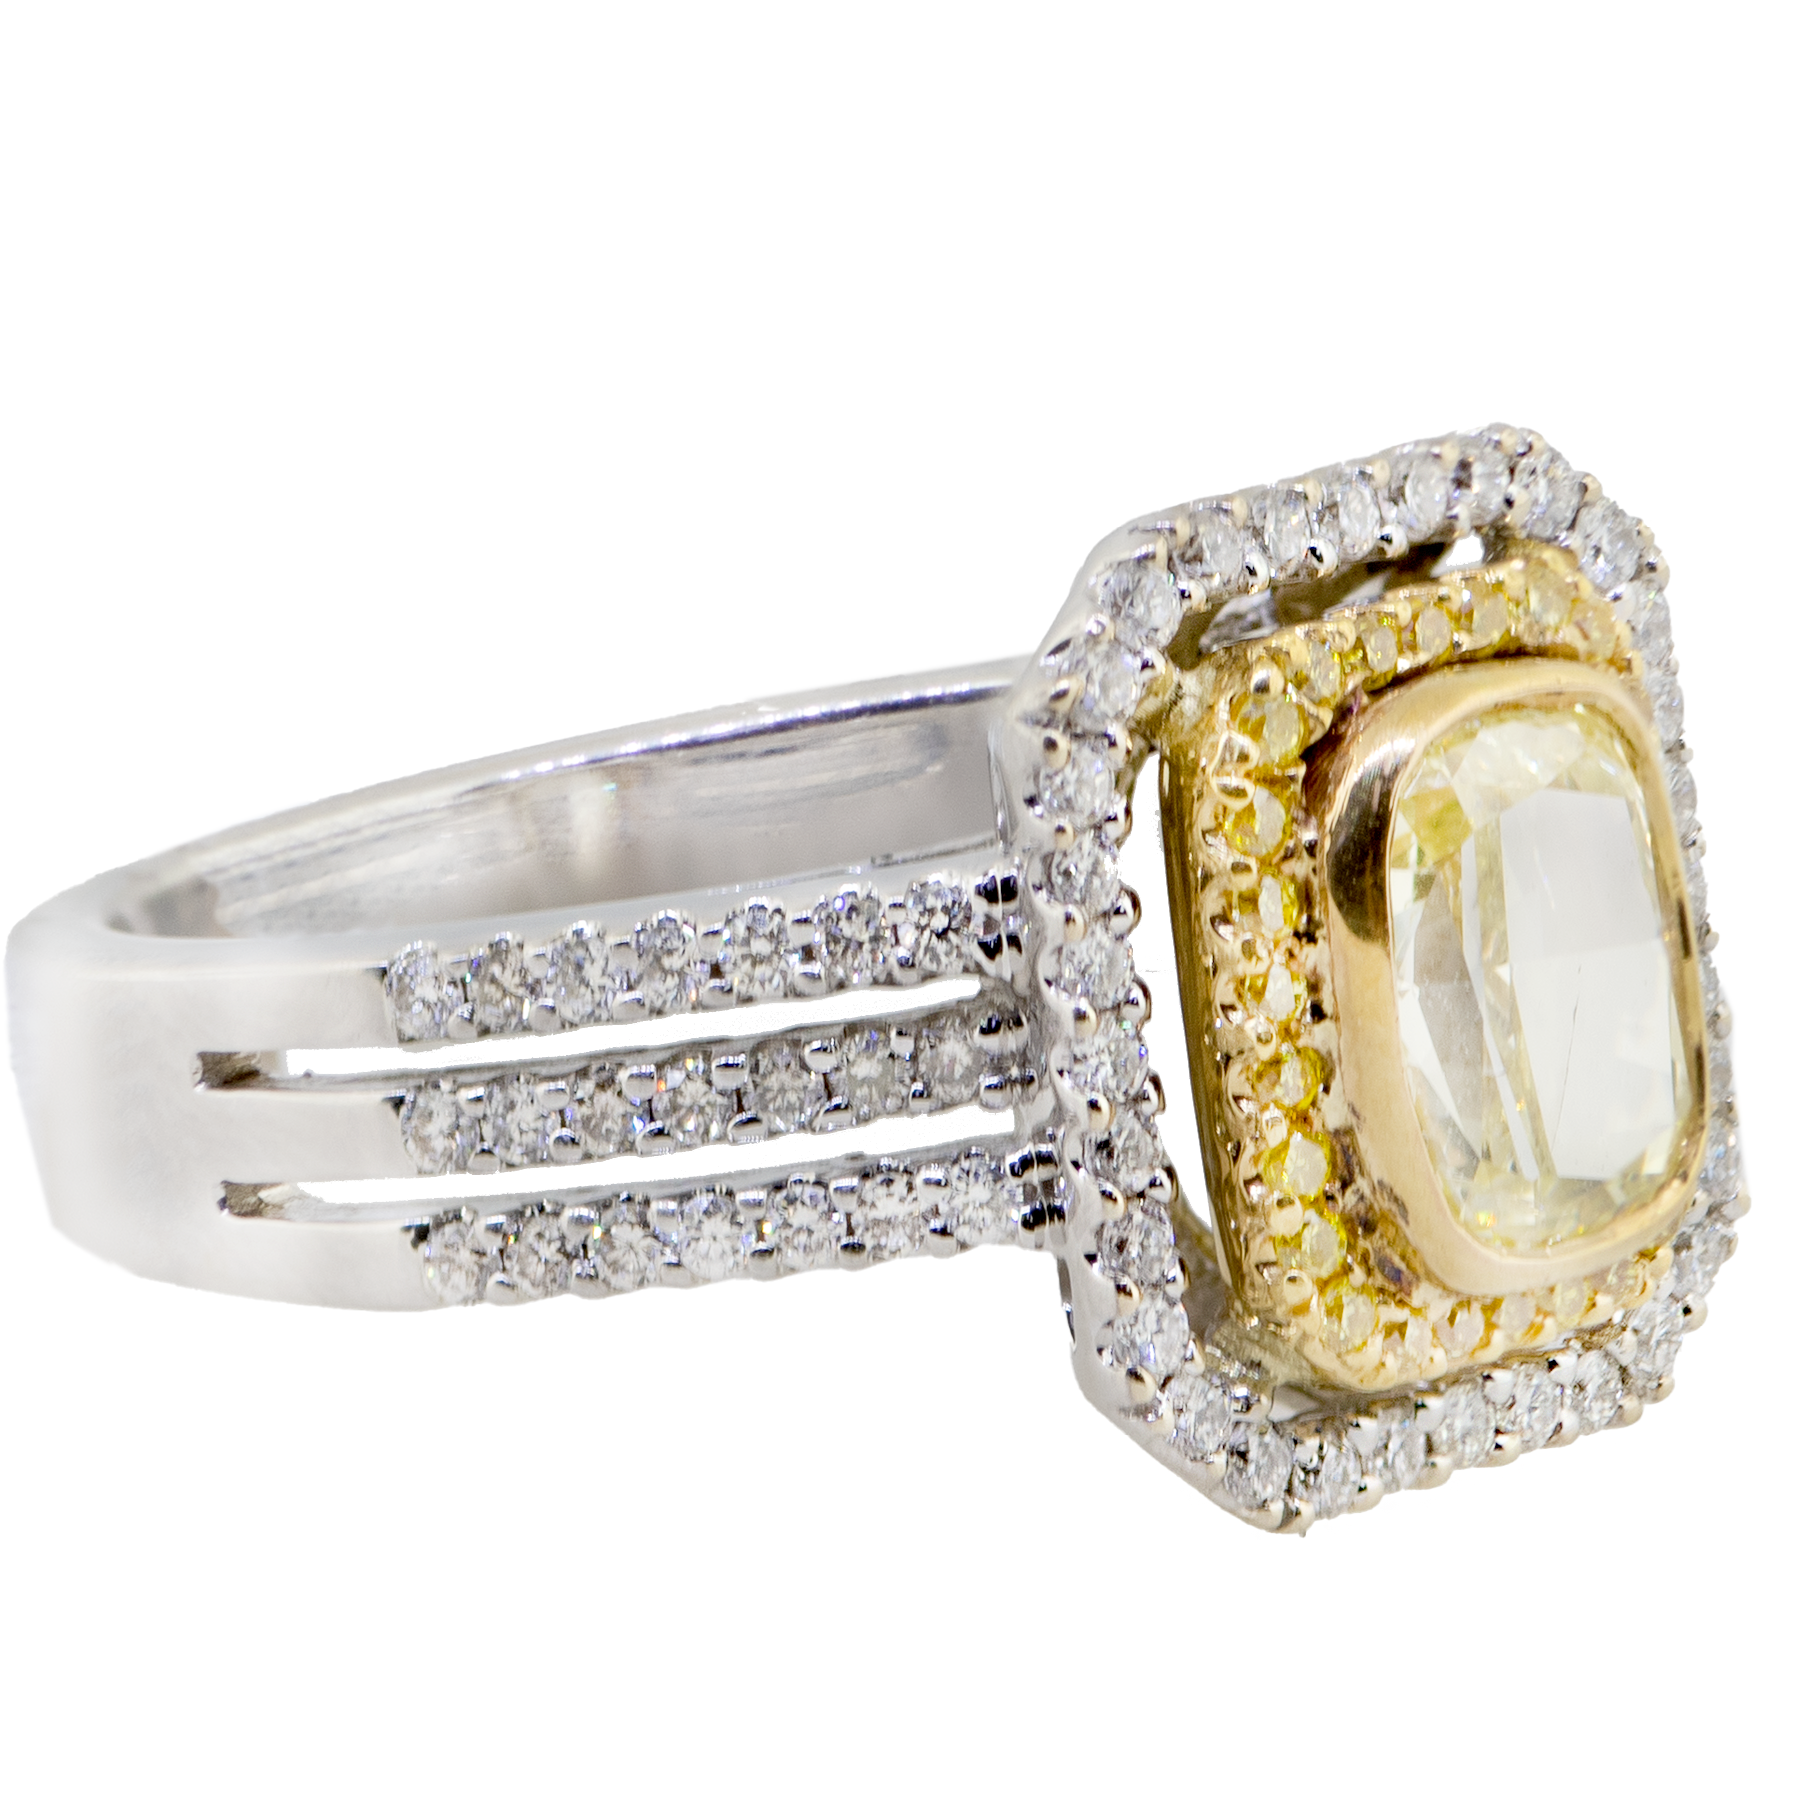 Buy quality 22K unique diamond ring in Patan